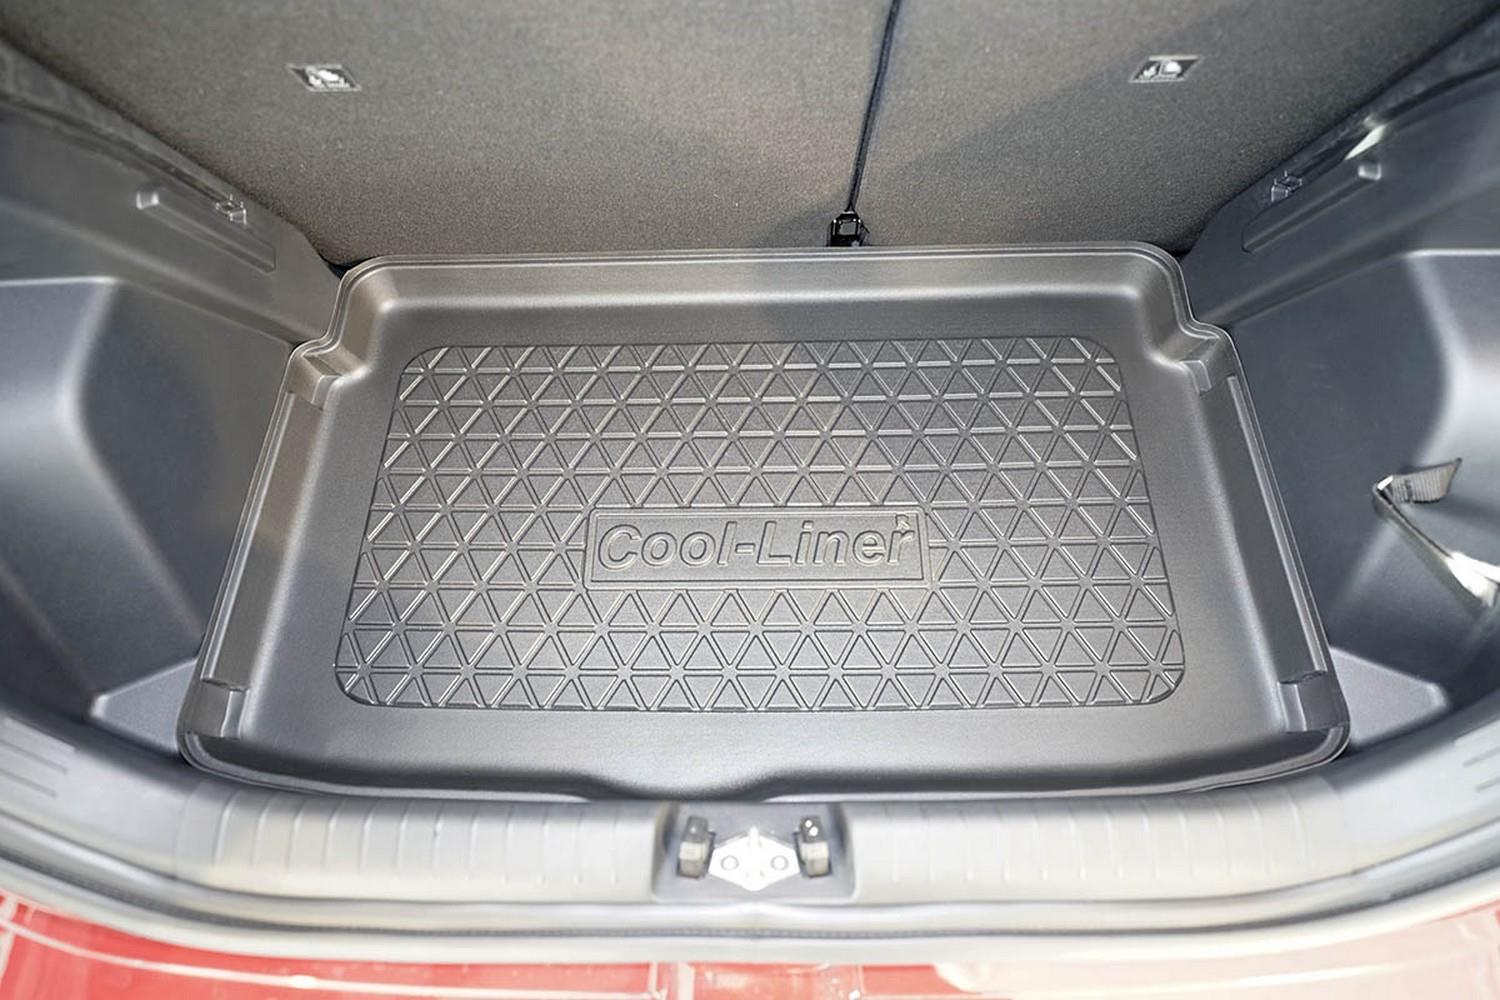 https://www.carparts-expert.com/images/stories/virtuemart/product/hyu5i2tm-hyundai-i20-bc3-2020-5-door-hatchback-cool-liner-anti-slip-pe-tpe-rubber-1.jpg